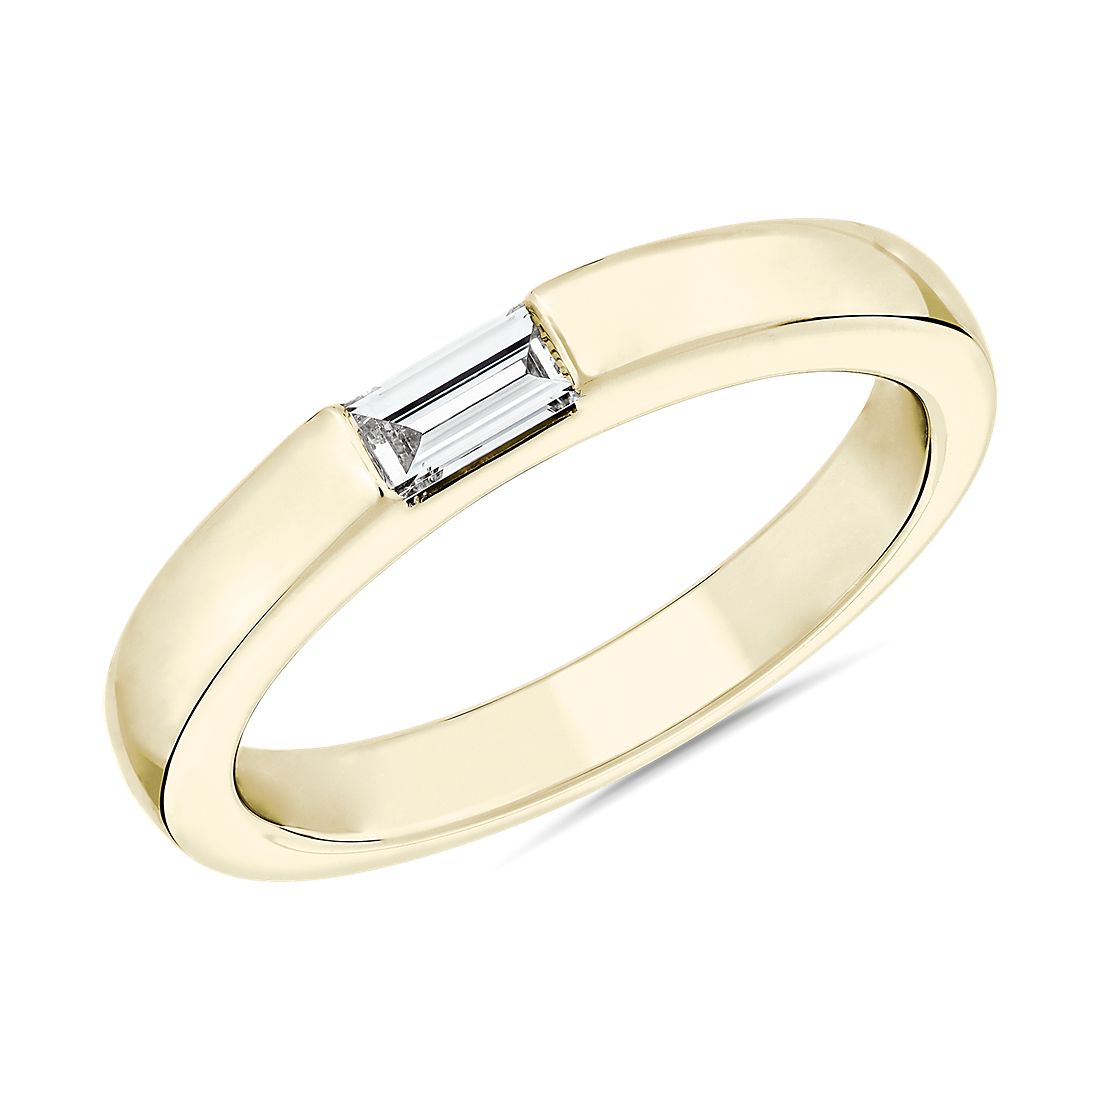 ZAC ZAC POSEN East West Single Baguette Diamond Ring in 14k Yellow Gold (2.6 mm, 1/6 ct. tw.)